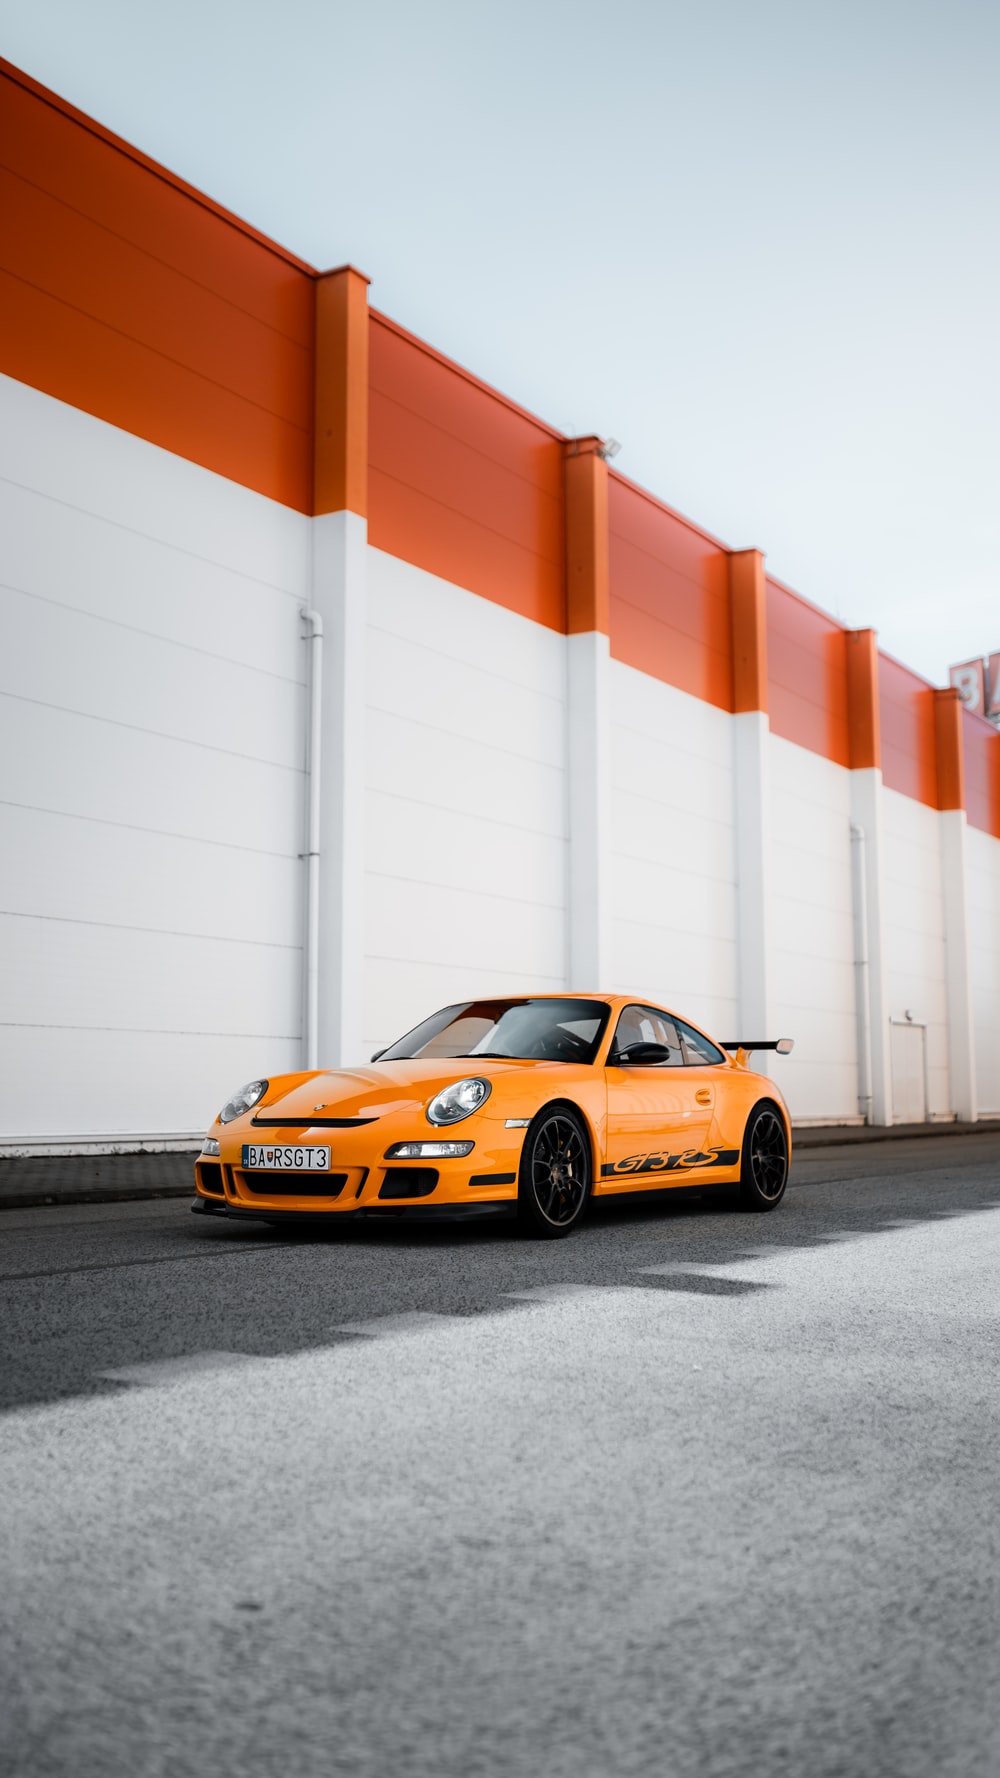 Porsche 911 Sport Cars In Red Orange Black Green Wallpapers